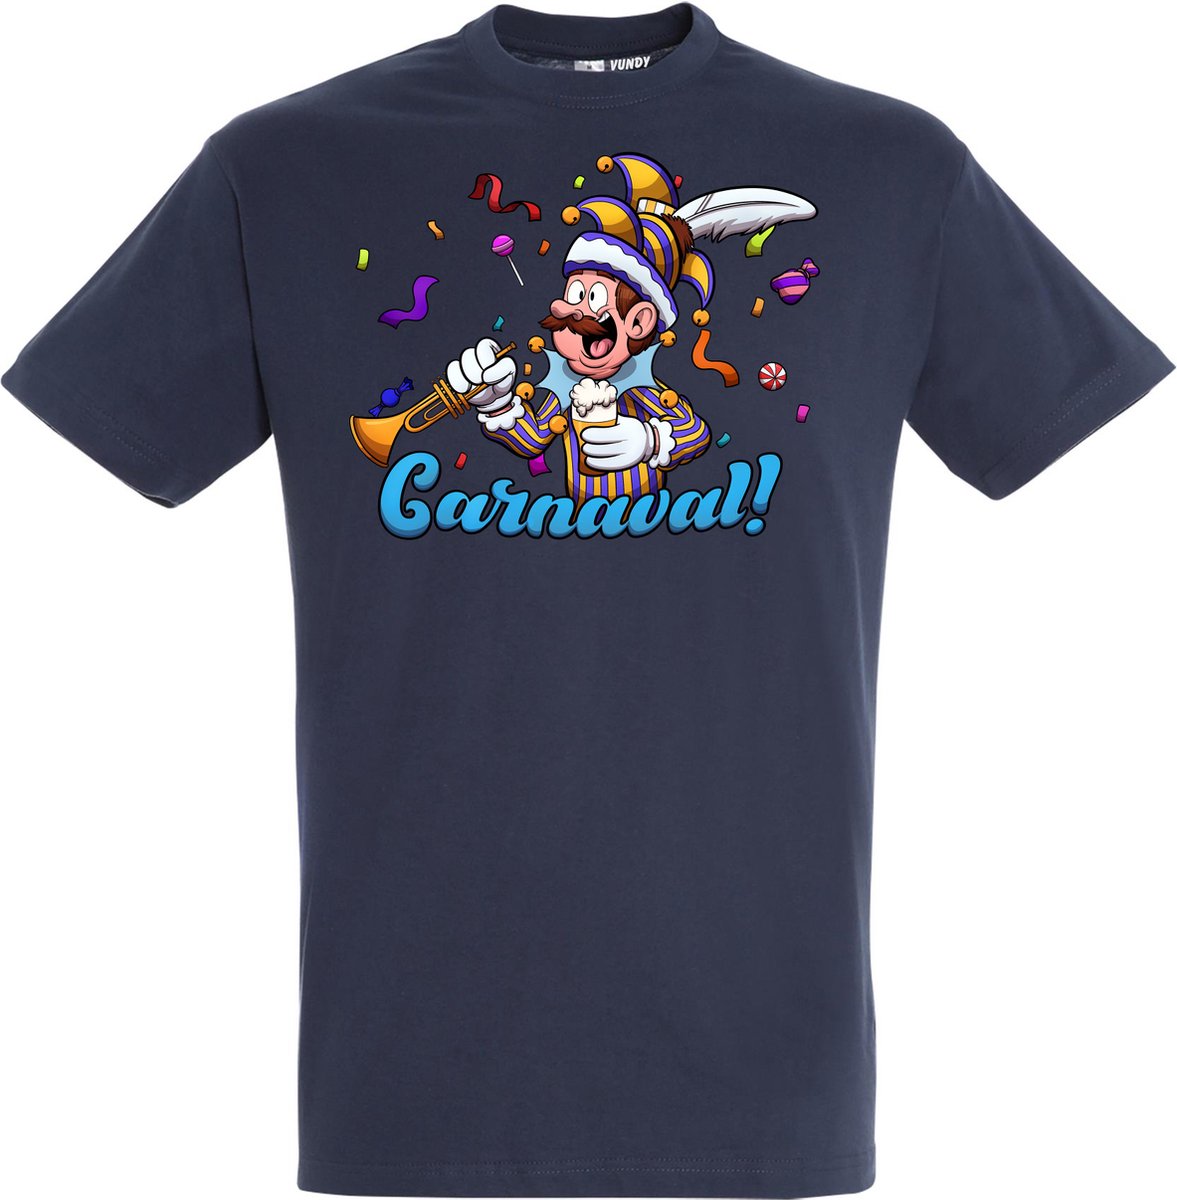 T-shirt kinderen Carnavalluh | Carnaval | Carnavalskleding Kinderen Baby | Navy | maat 140